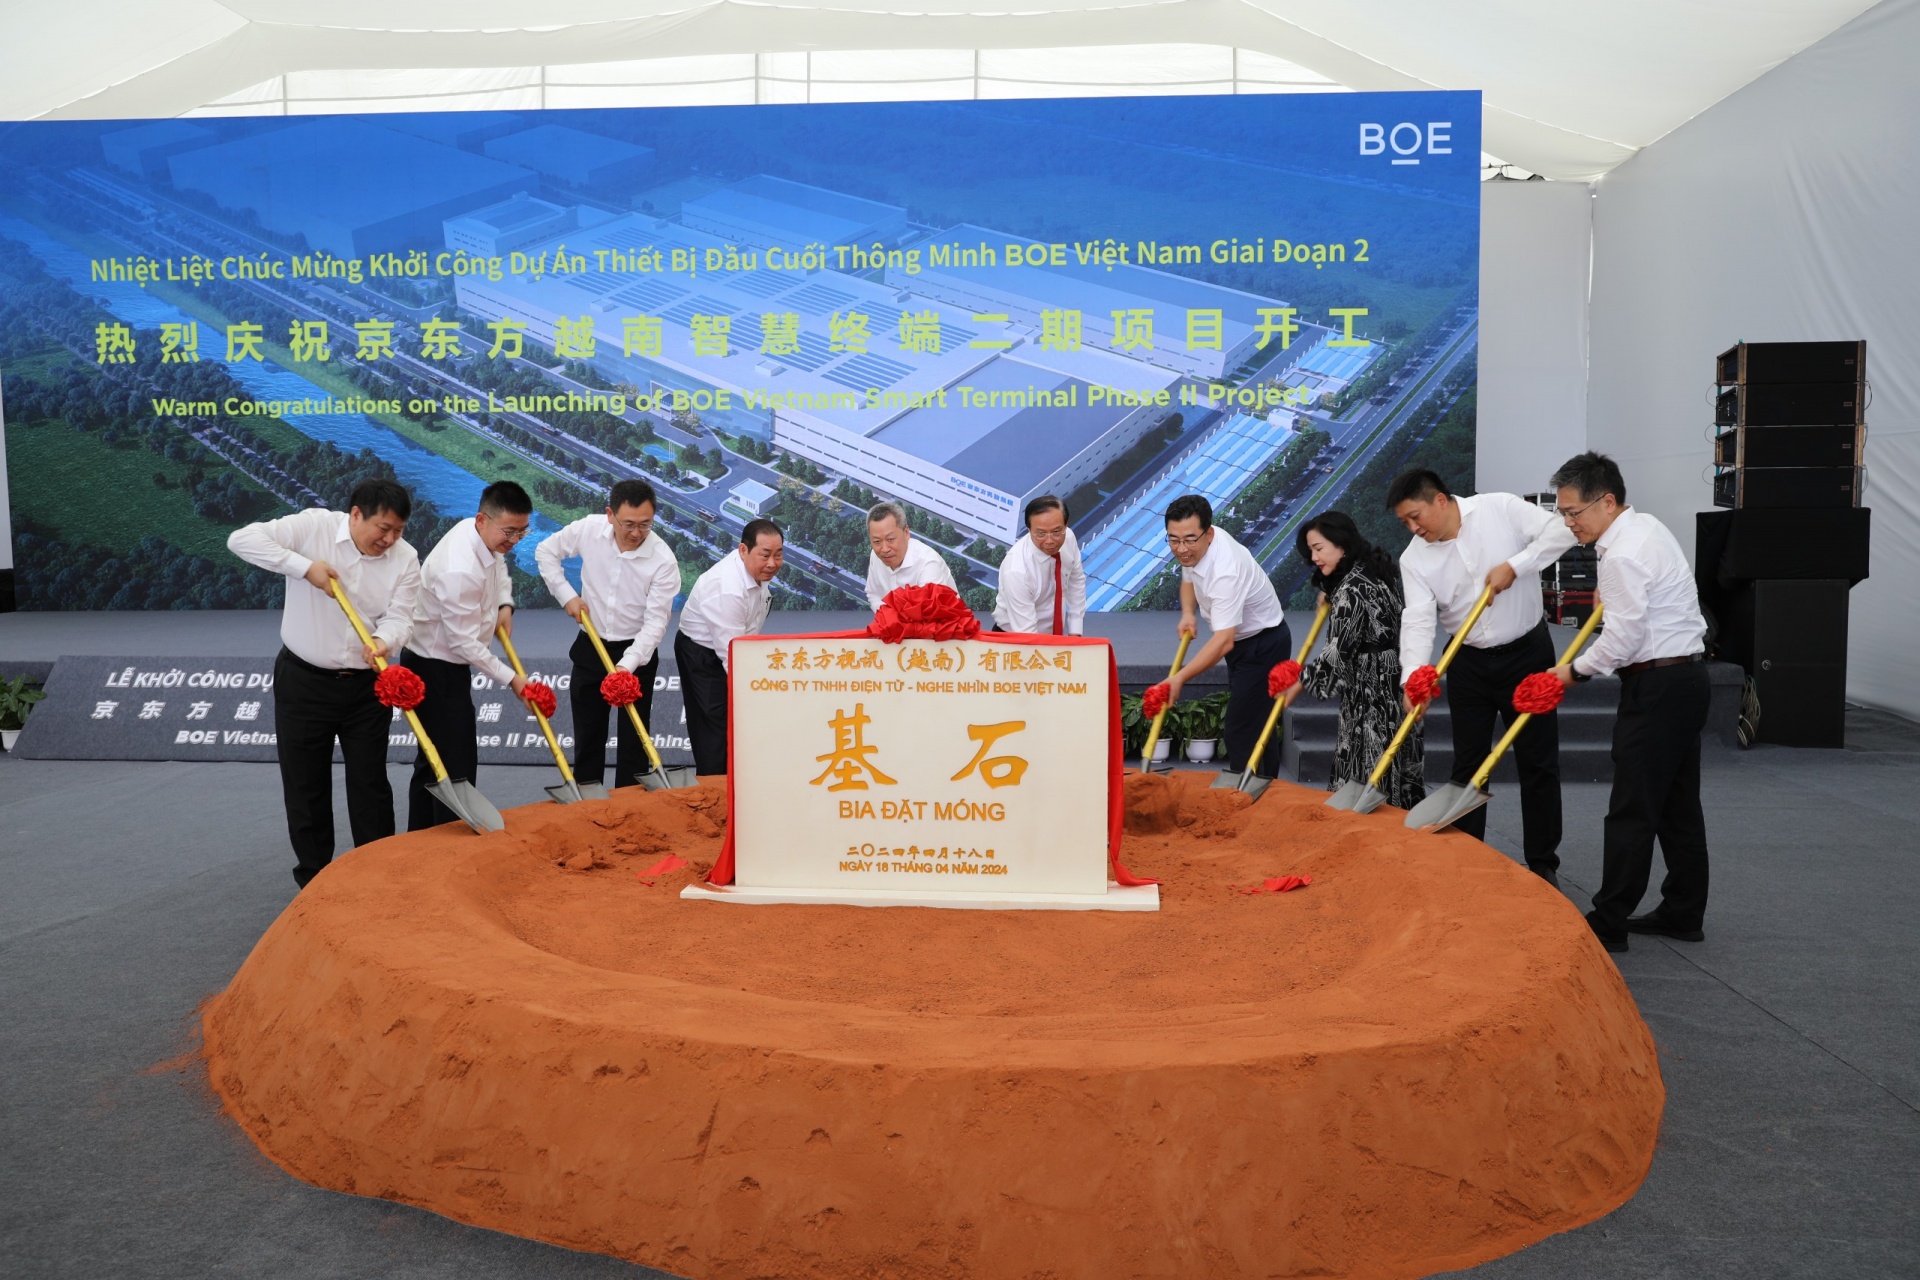 China's BOE builds $275 million electronics factory in Ba Ria-Vung Tau